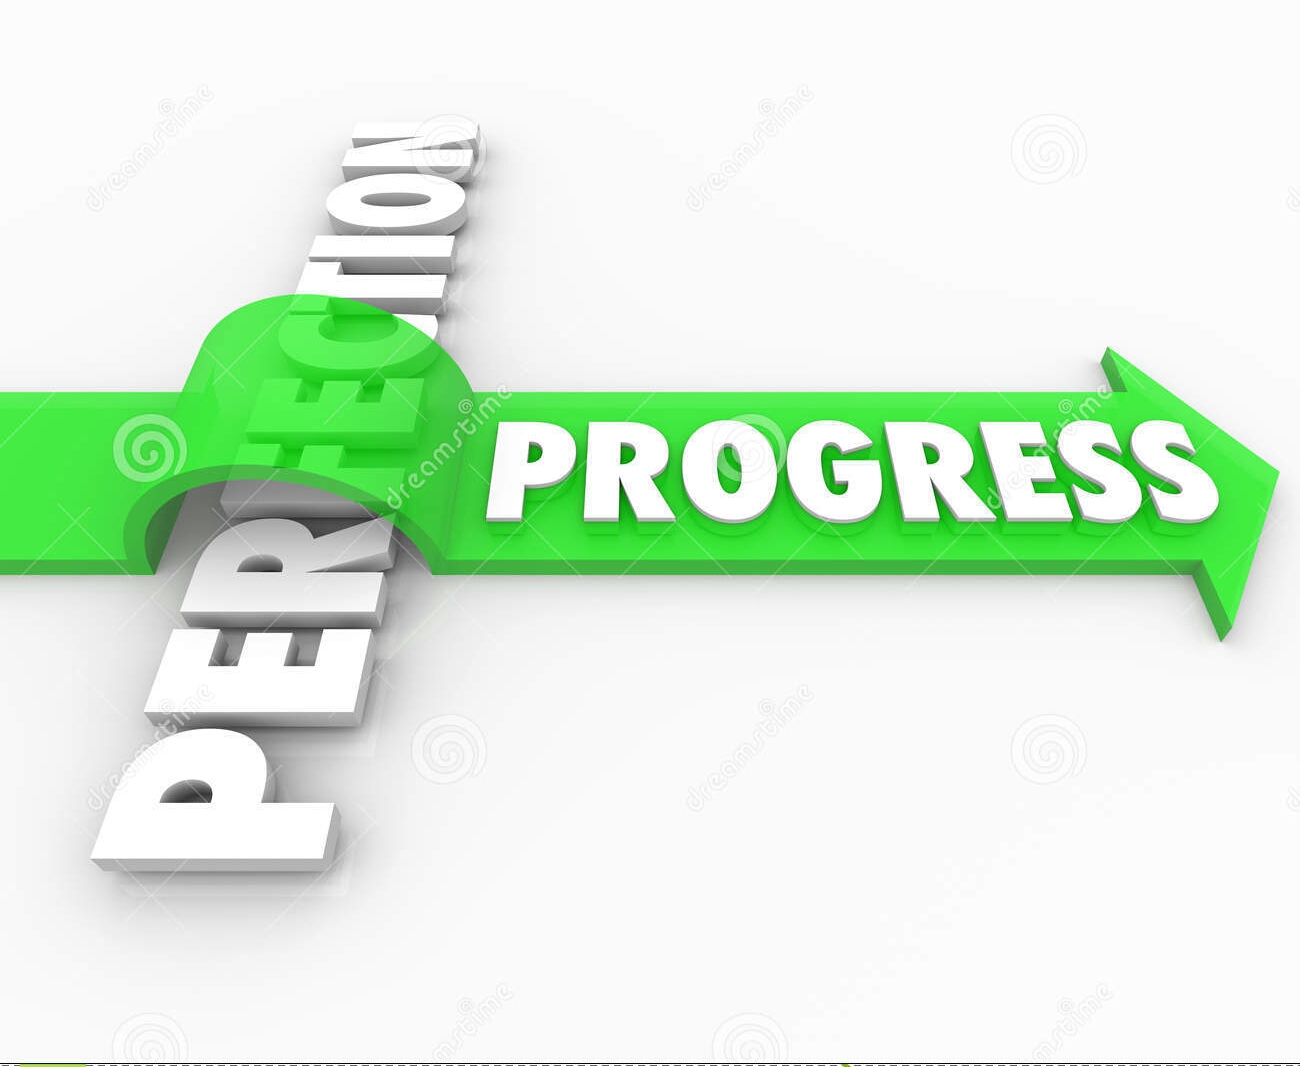 progress-arrow-jumps-over-perfection-move-forward-improve-word-rides-green-word-to-illustrate-drive-toward-improvement-39264929-1.jpg